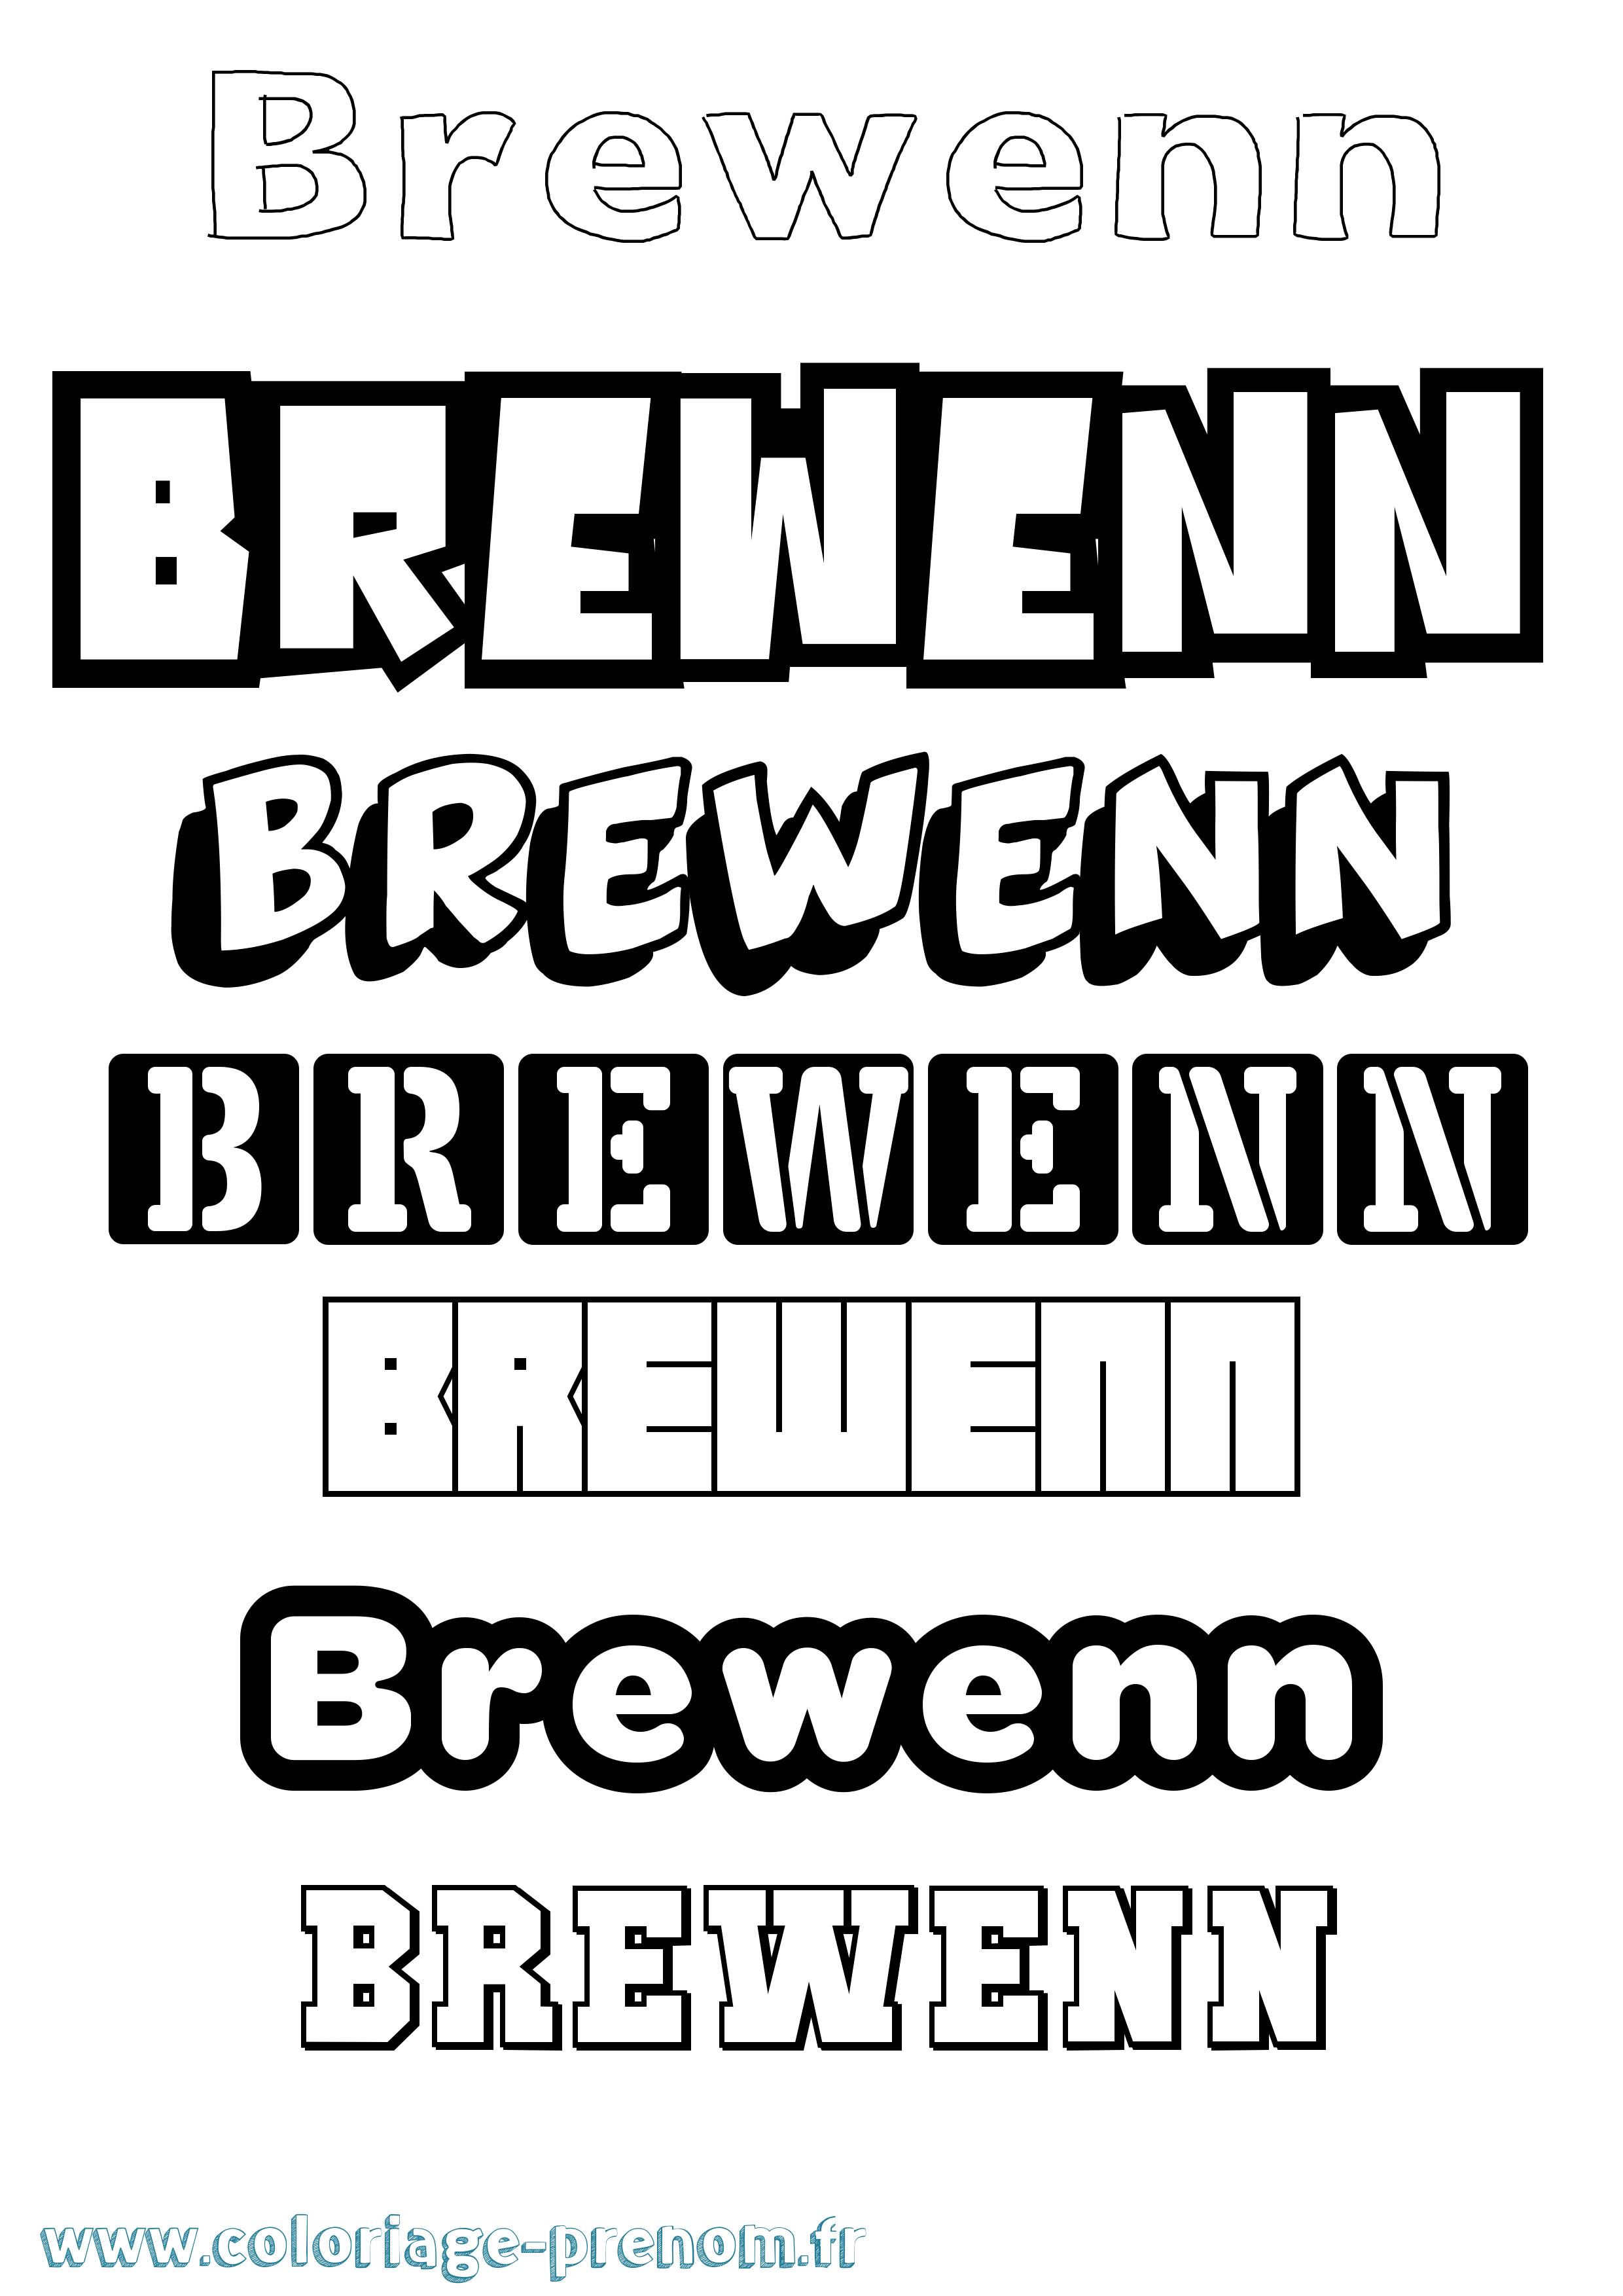 Coloriage prénom Brewenn Simple